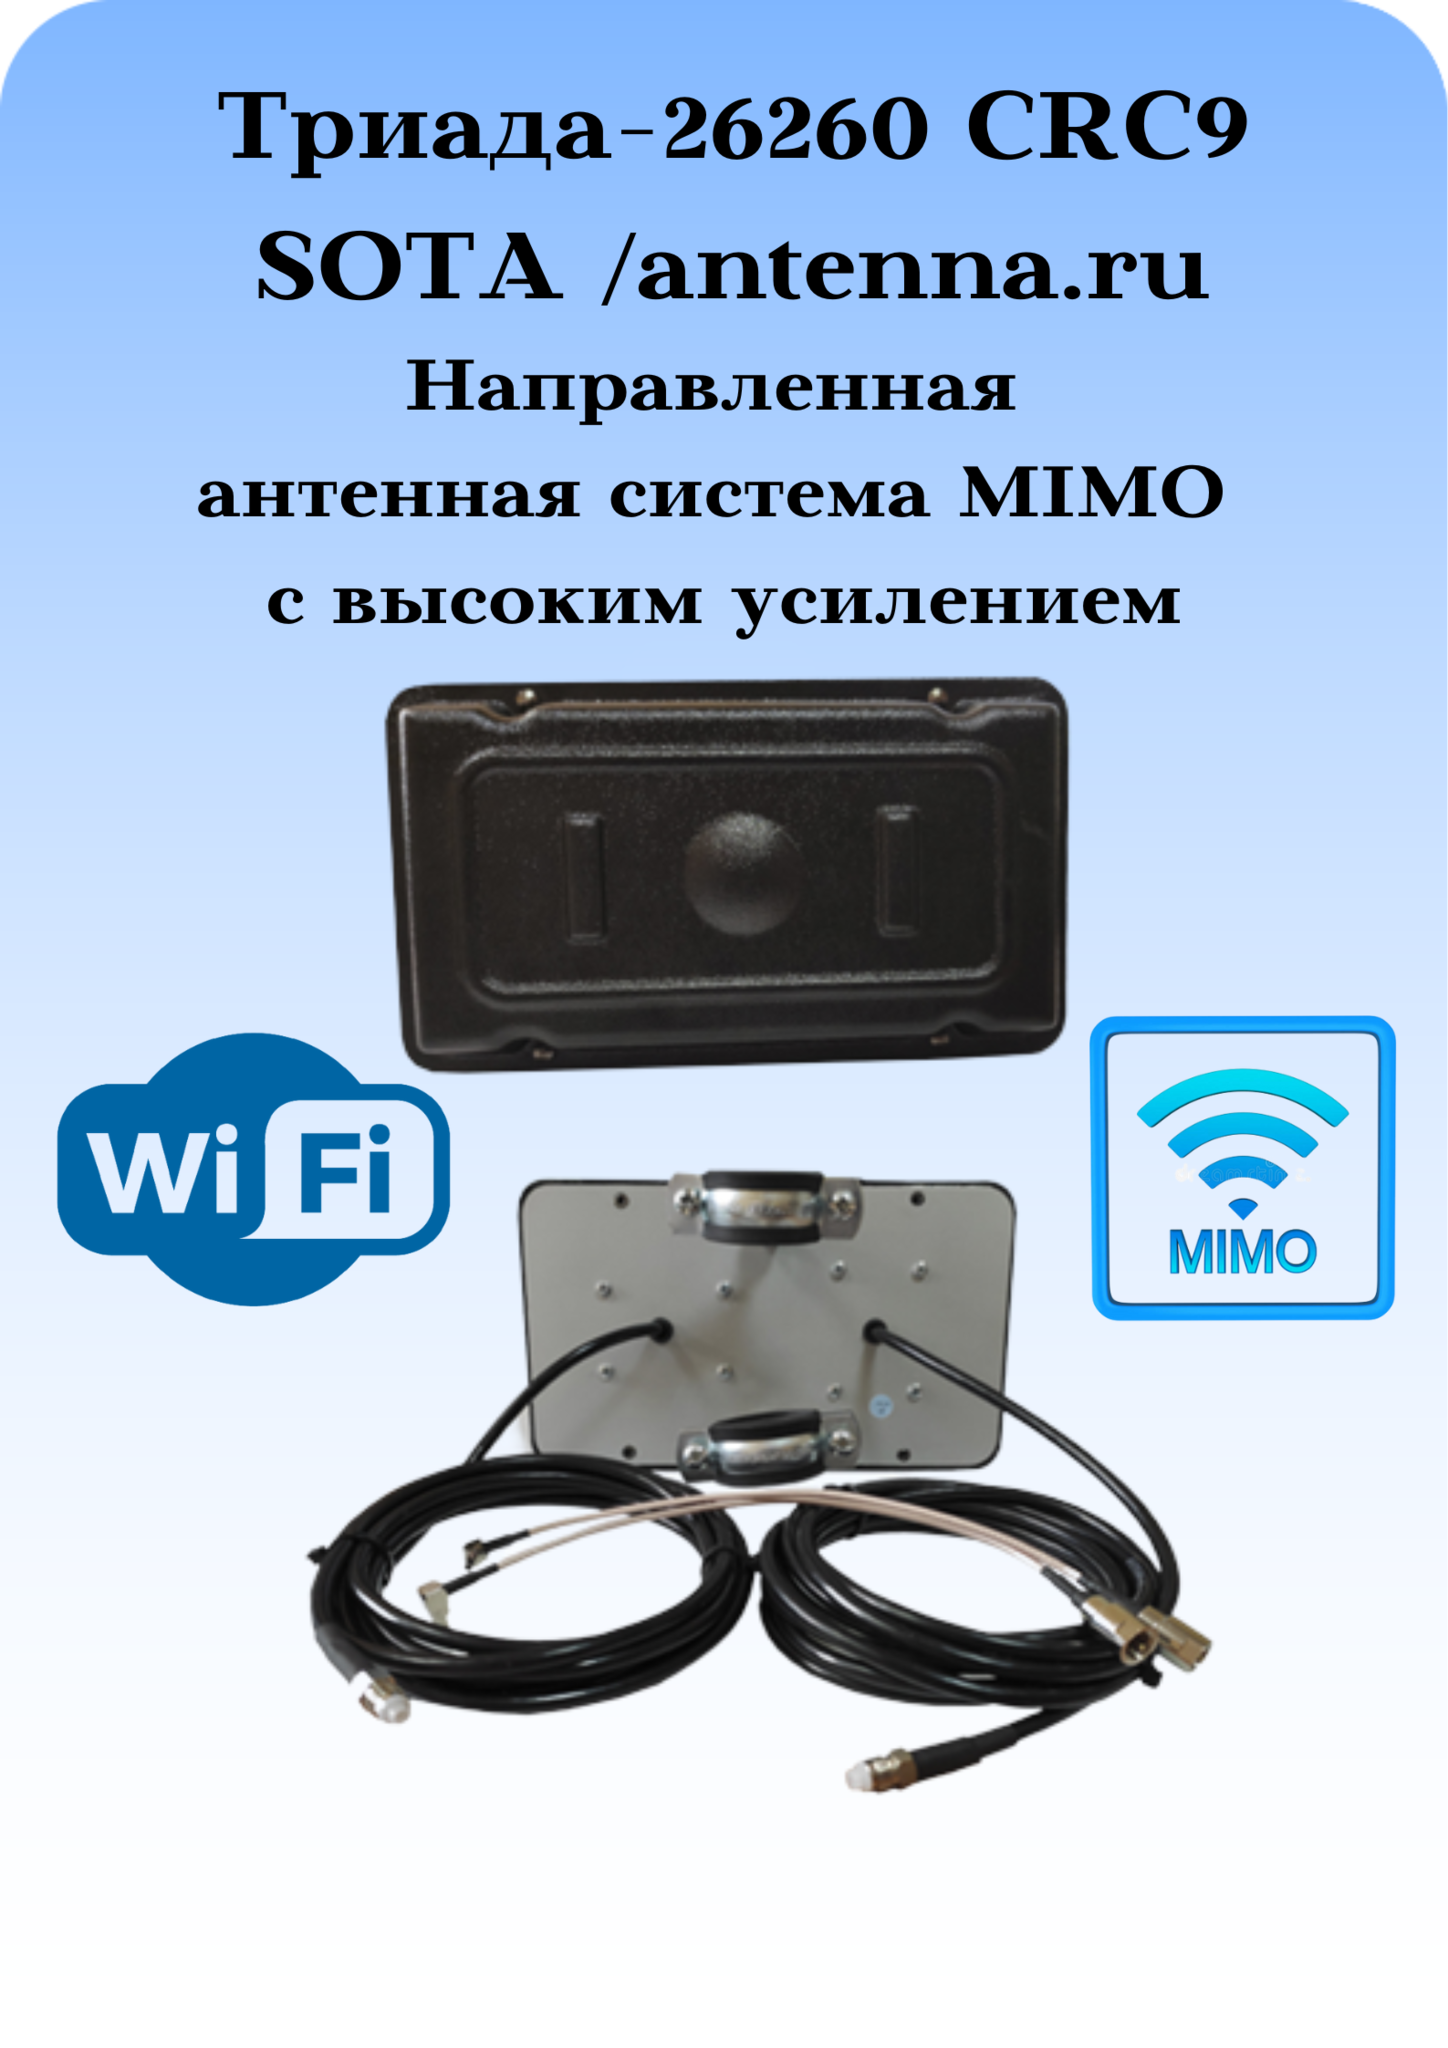 Триада-26260-CRC9/antenna.ru. Антенна MIMO 3G/4G/1800/900МГц направленная на кронштейн с большим усилением